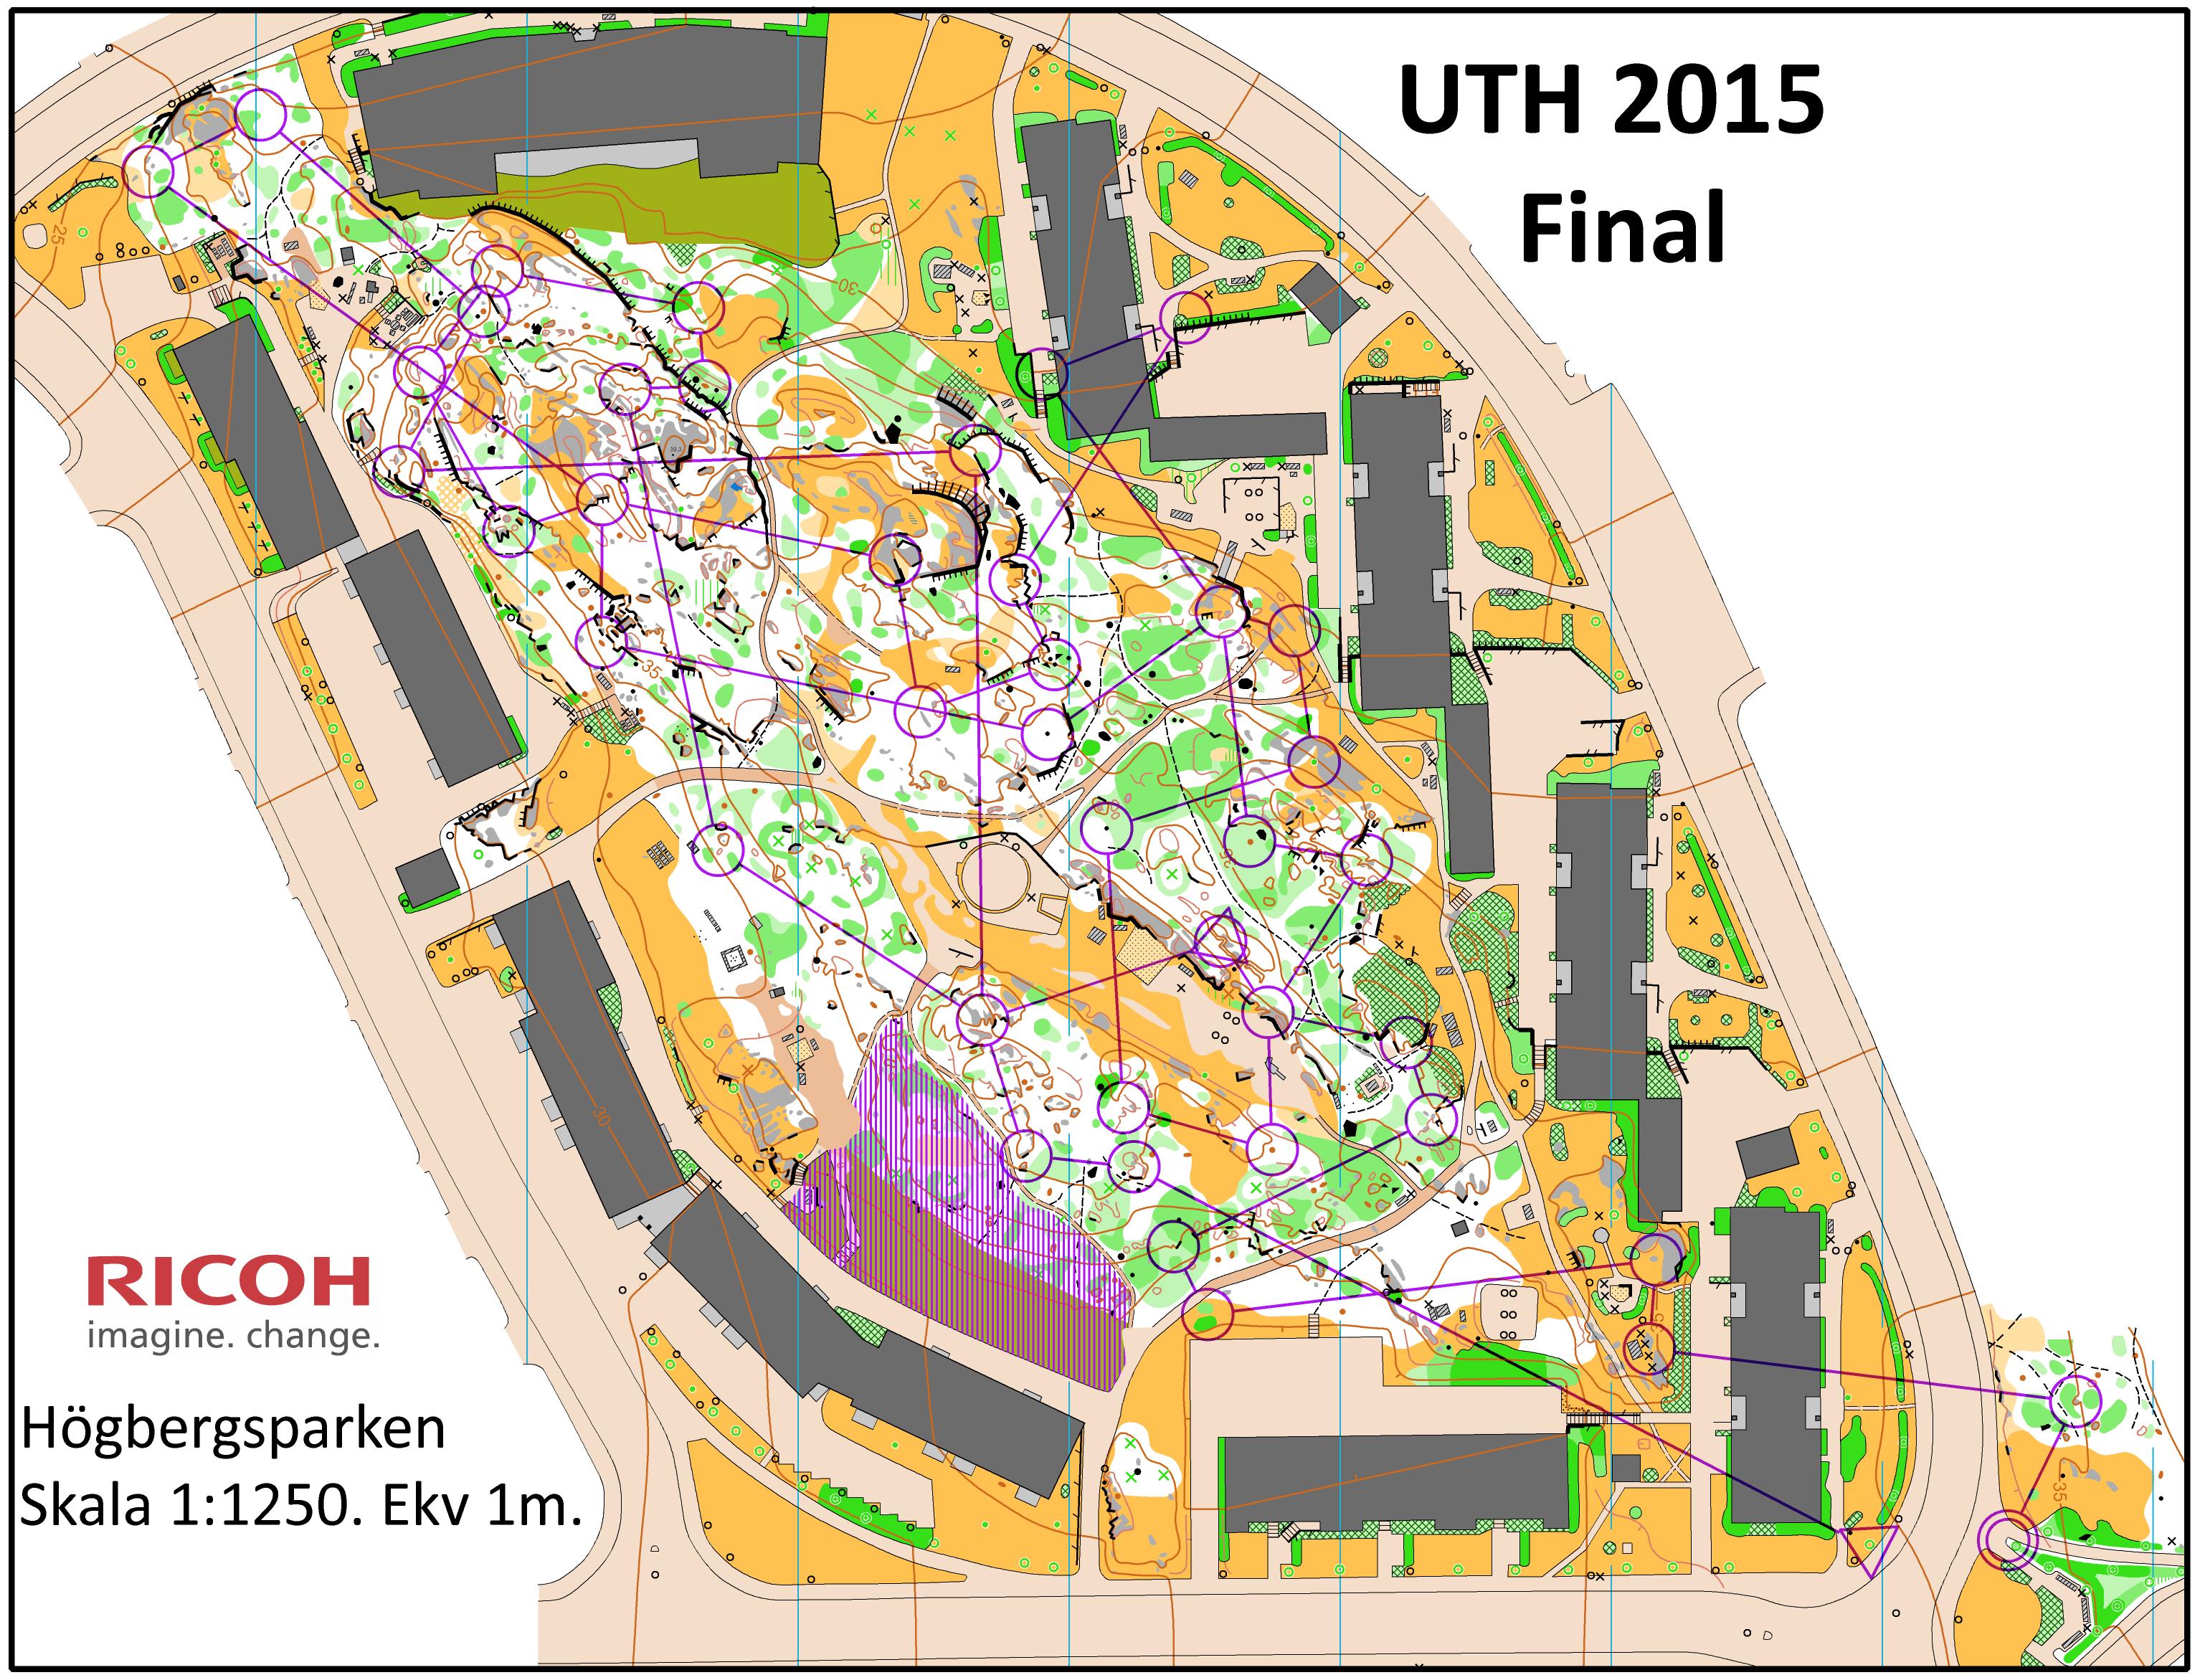 UTH15 - Ultrasprint (06/12/2015)